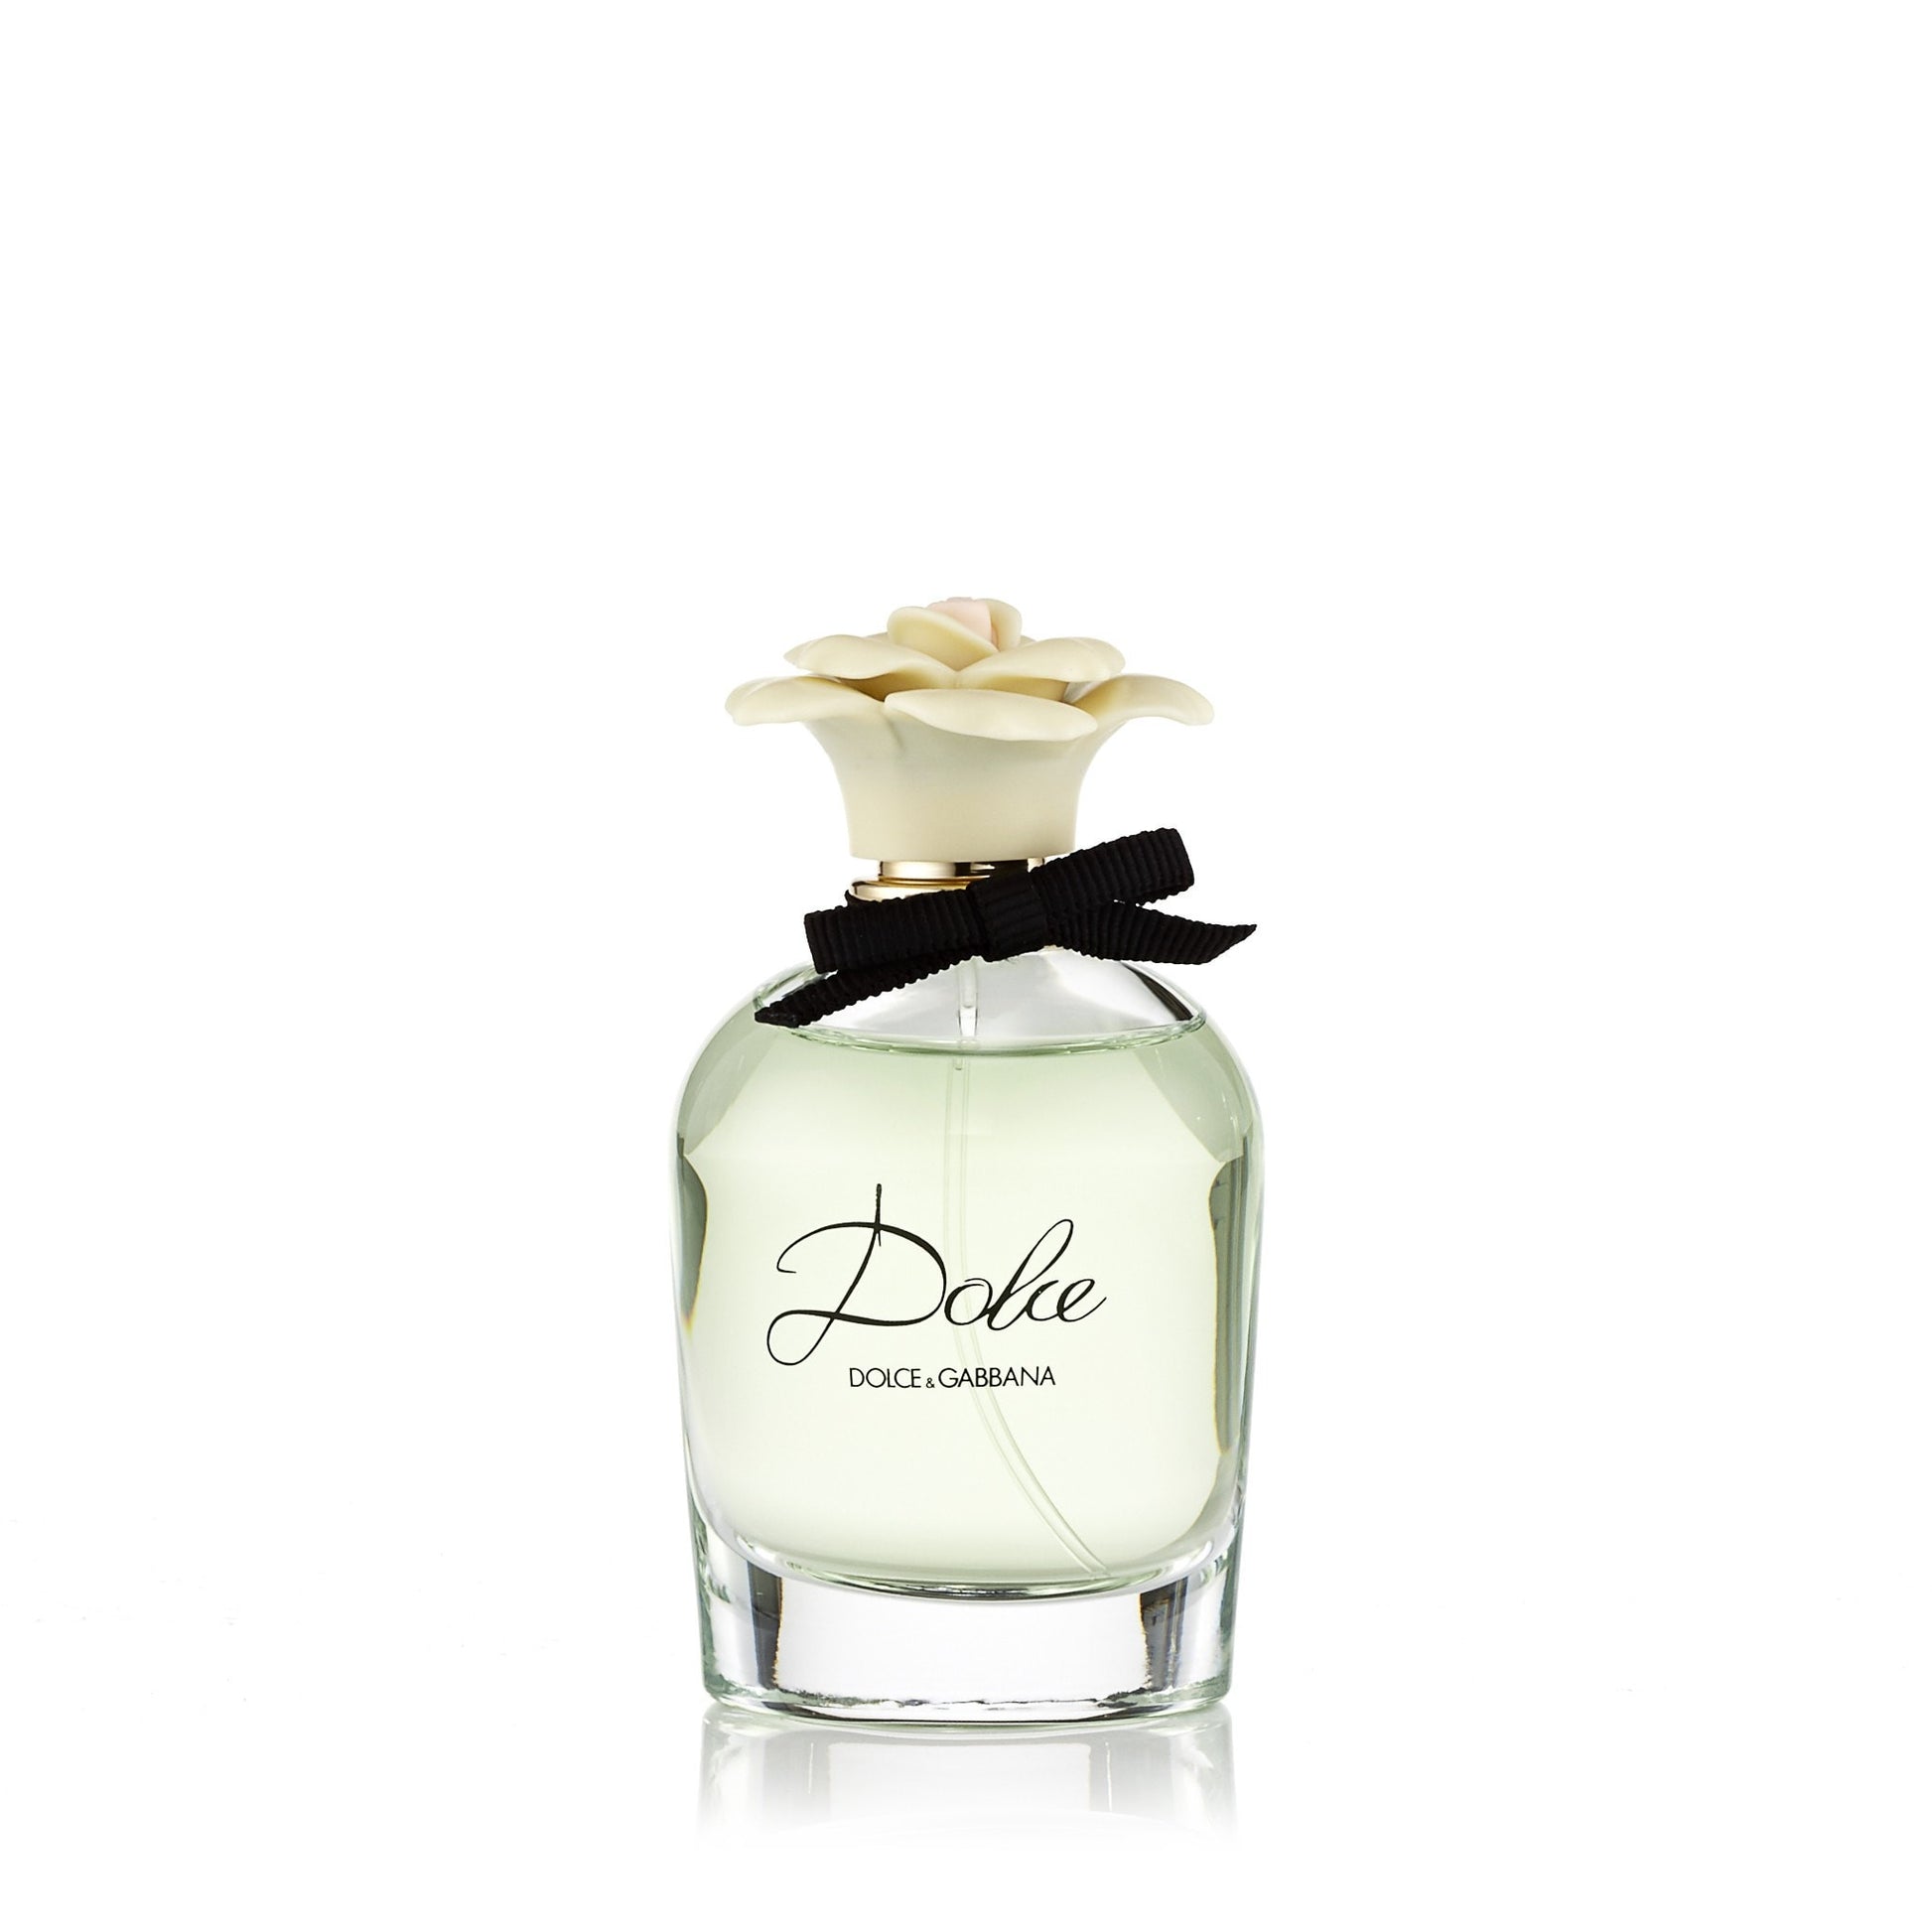 Dolce Eau de Parfum Spray for Women by D&G 2.5 oz. Click to open in modal